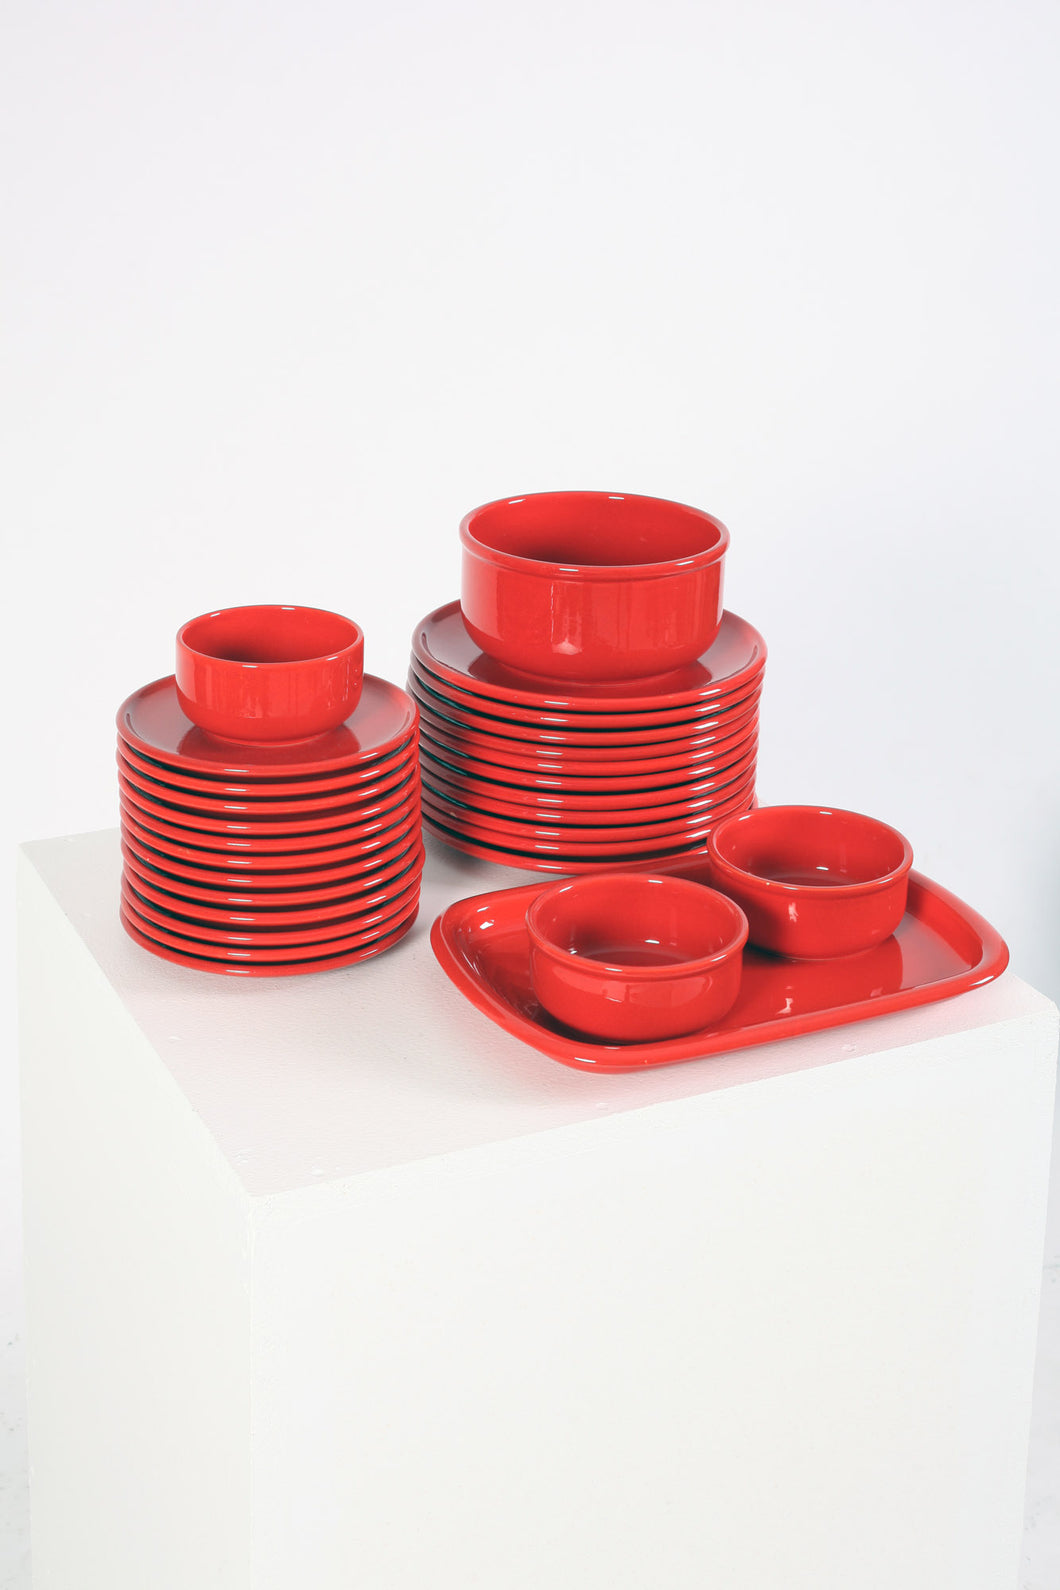 Retro Red Porcelain Dinnerware Set